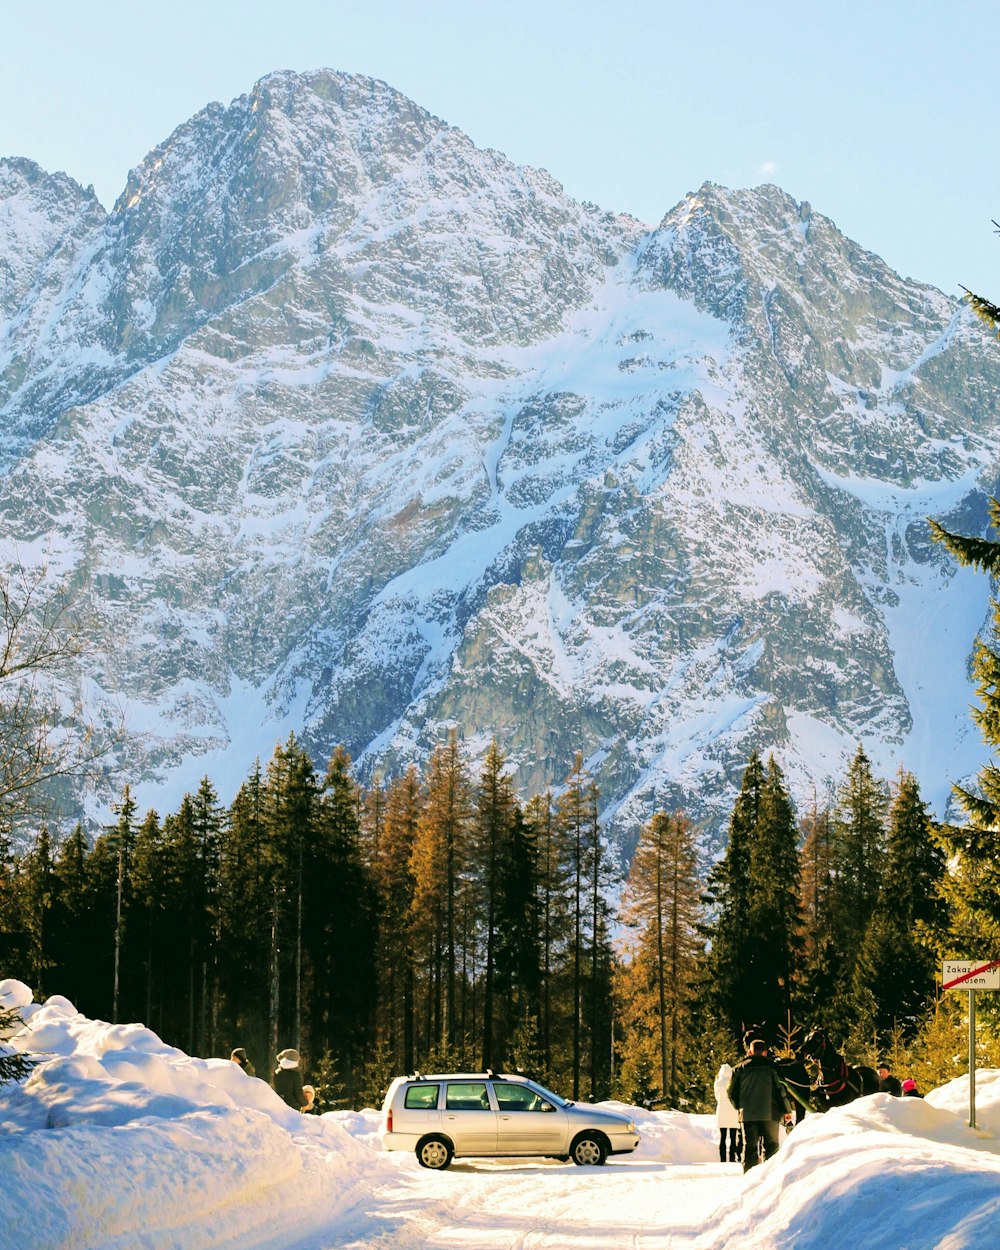 SUV park near alpine mountain with trees